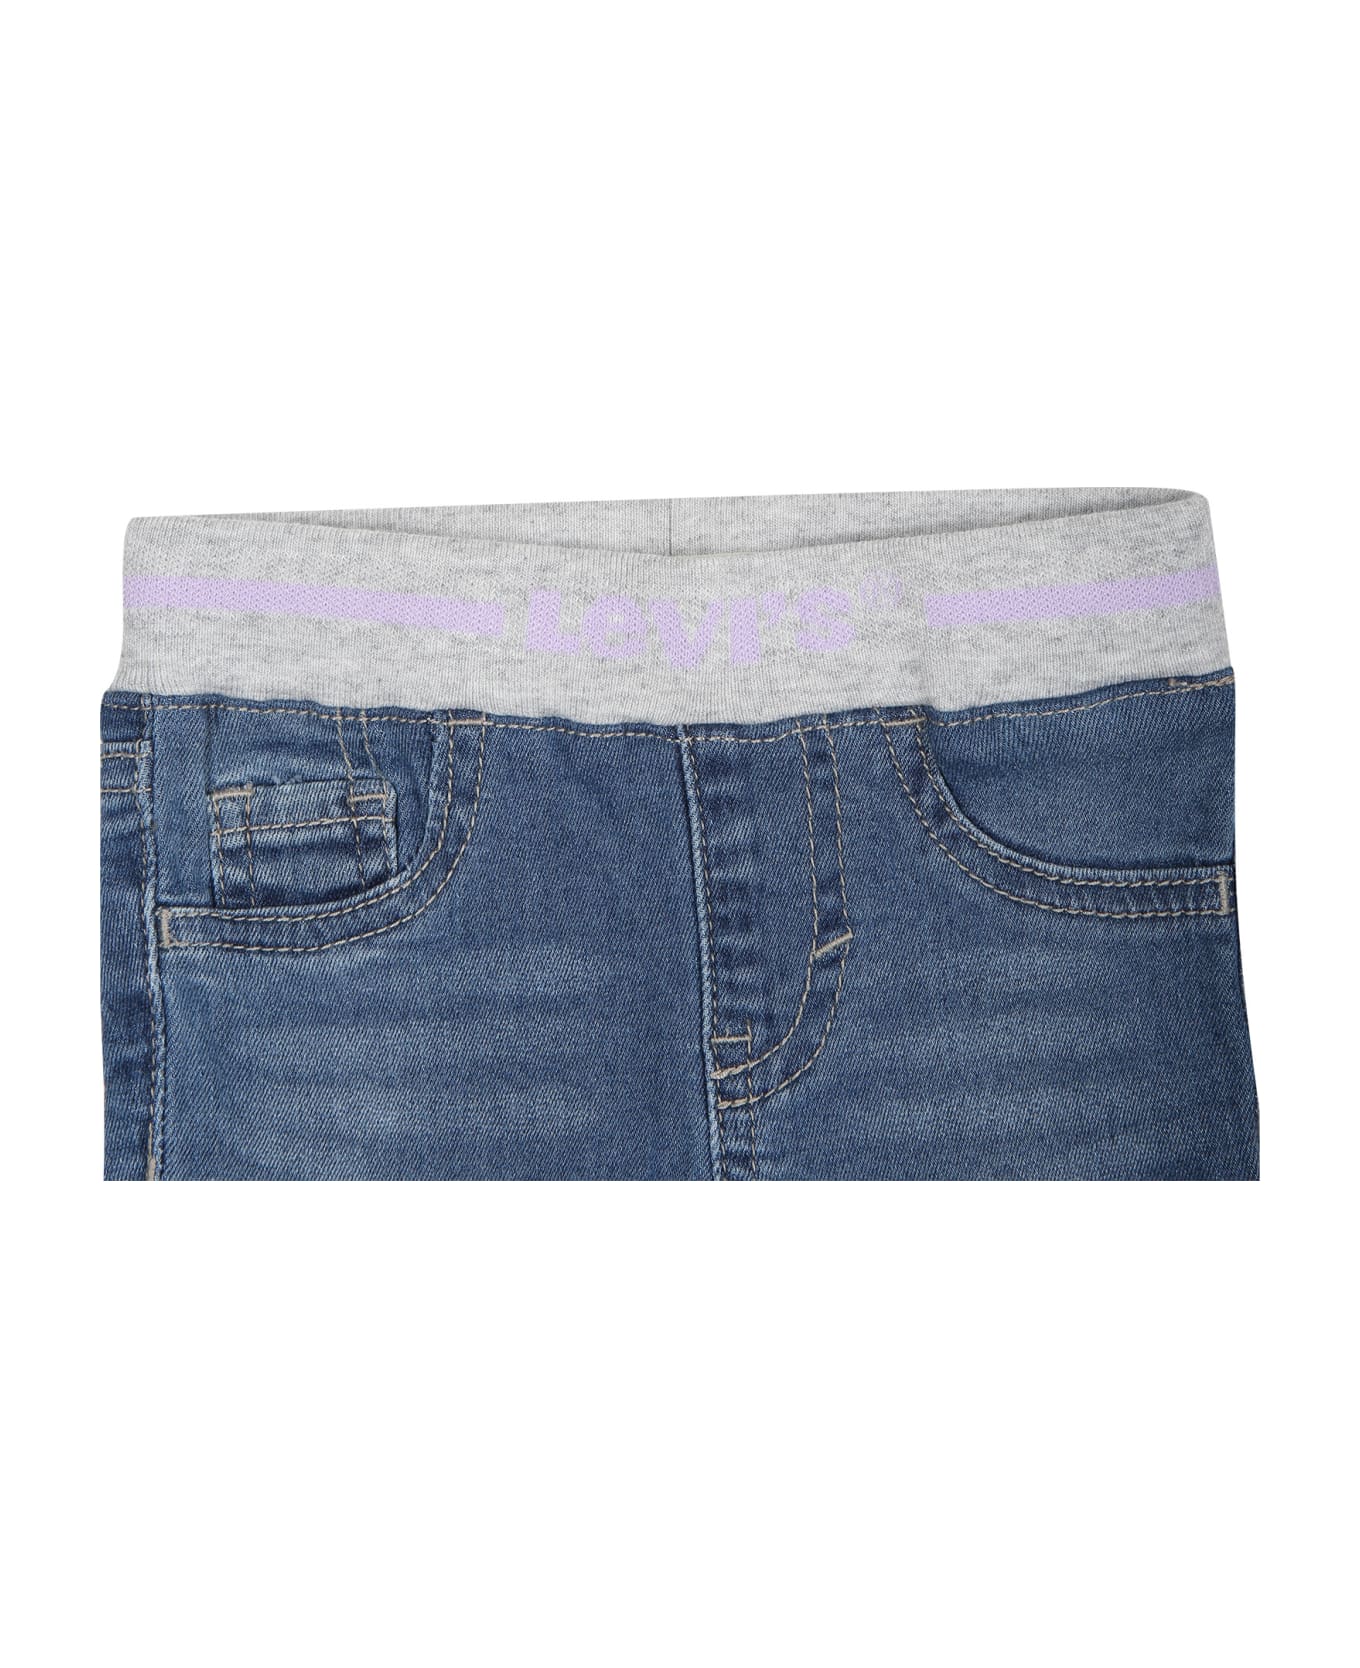 Levi's Denim Jeans For Baby Boy With Logo Patch - Denim